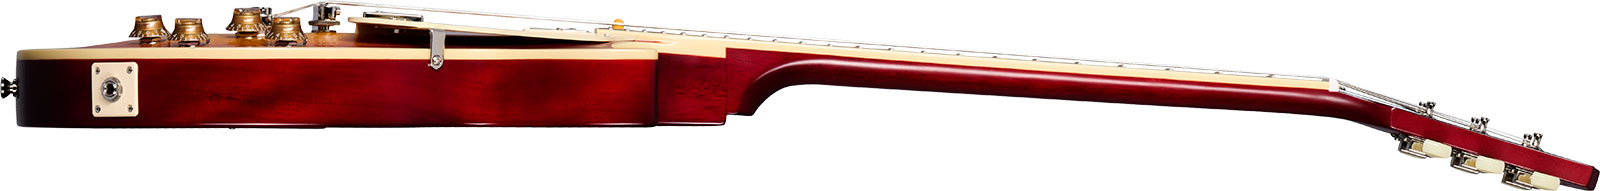 Epiphone 1959 Les Paul Standard Inspired By 2h Gibson Ht Lau - Vos Factory Burst - Enkel gesneden elektrische gitaar - Variation 2